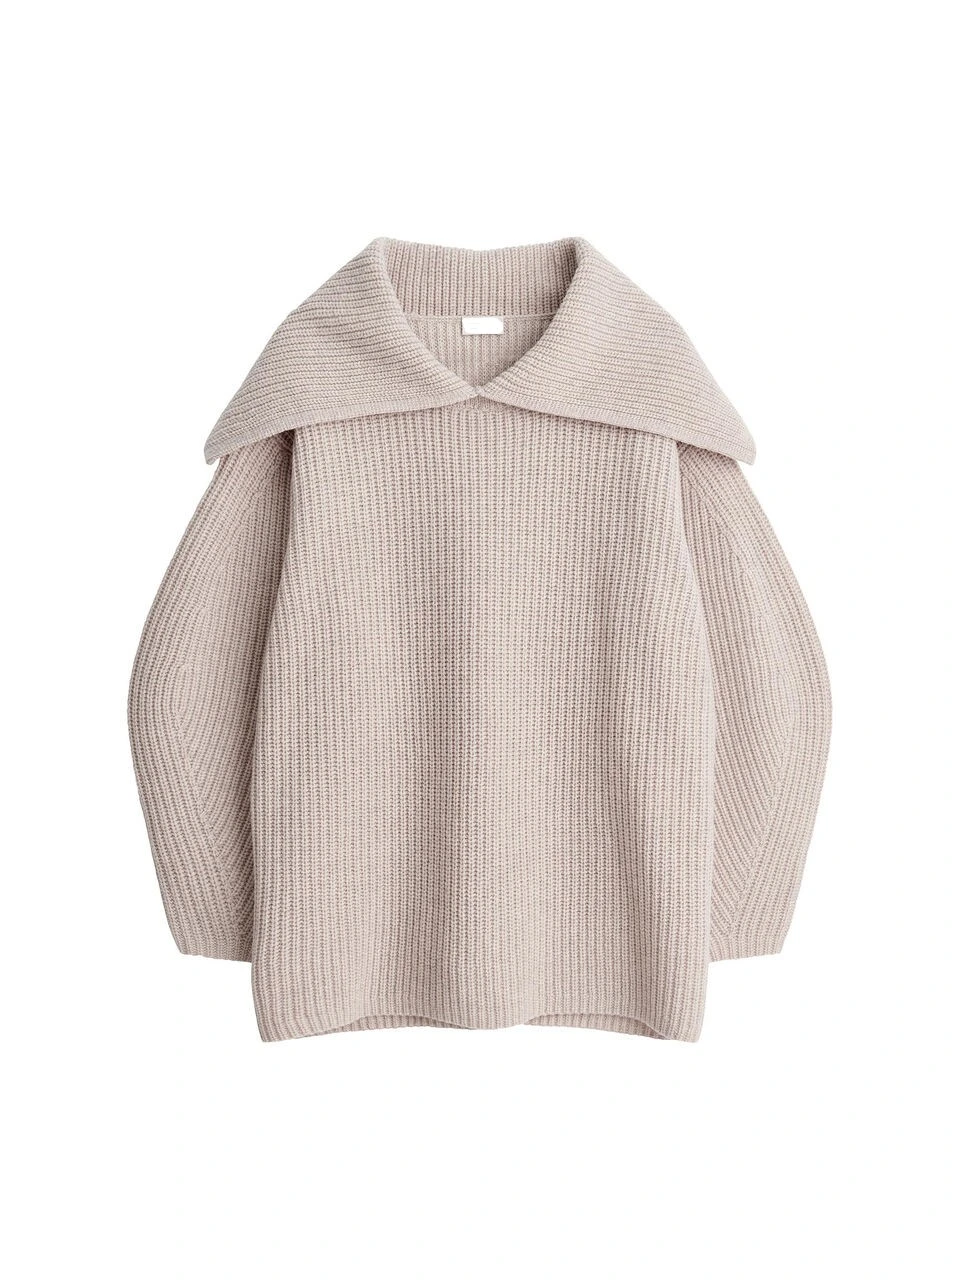 Women Sweaters Zip Up Fall Sweaters For Women Top Fashion Pullovers Turtleneck Sweater Women